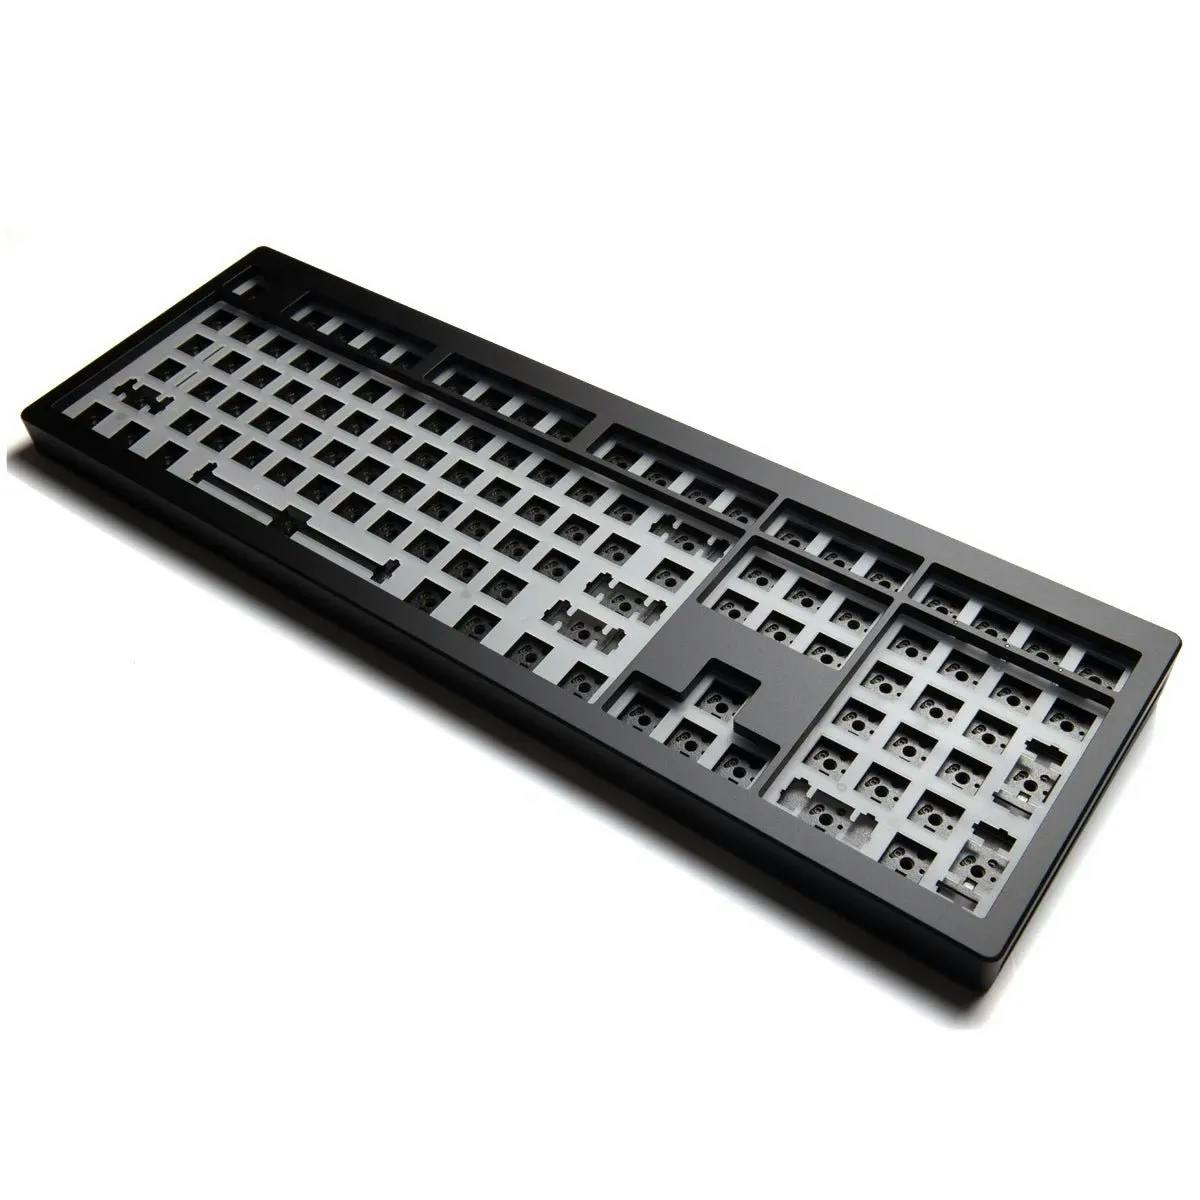 Image for Monsgeek M5 Full Keyboard